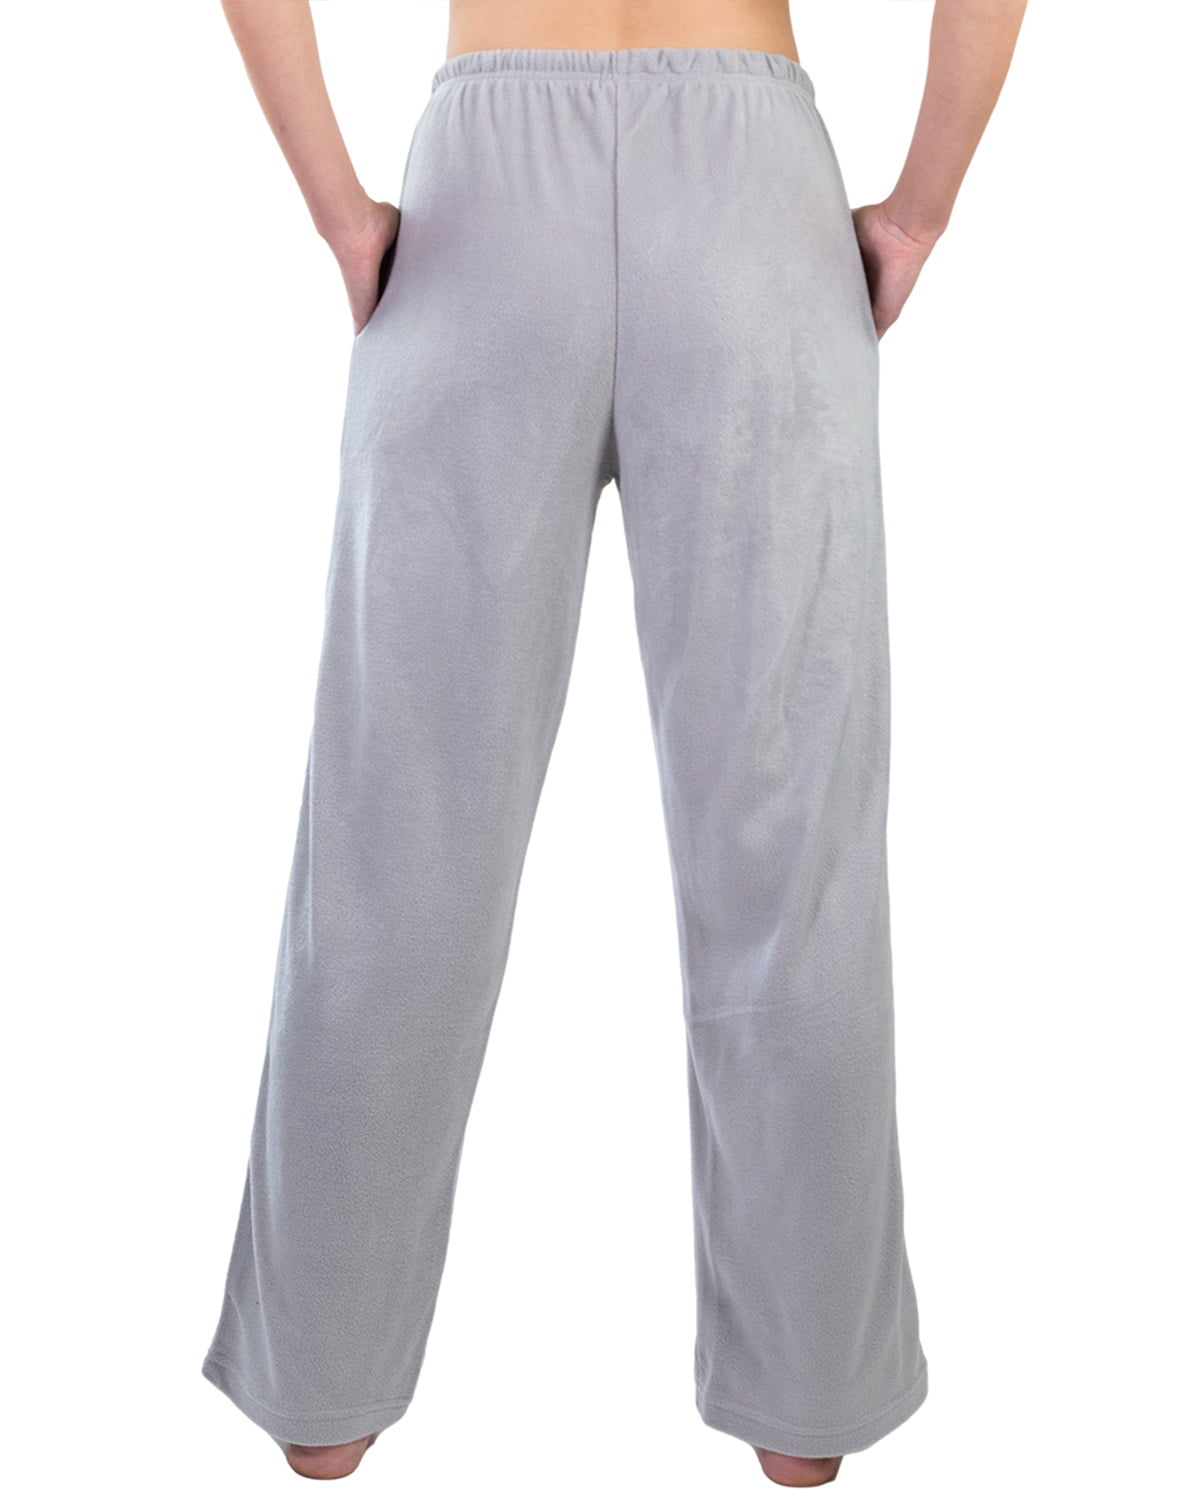 U2SKIIN Pajama Pants for Women Soft, Comfortable Womens Lounge